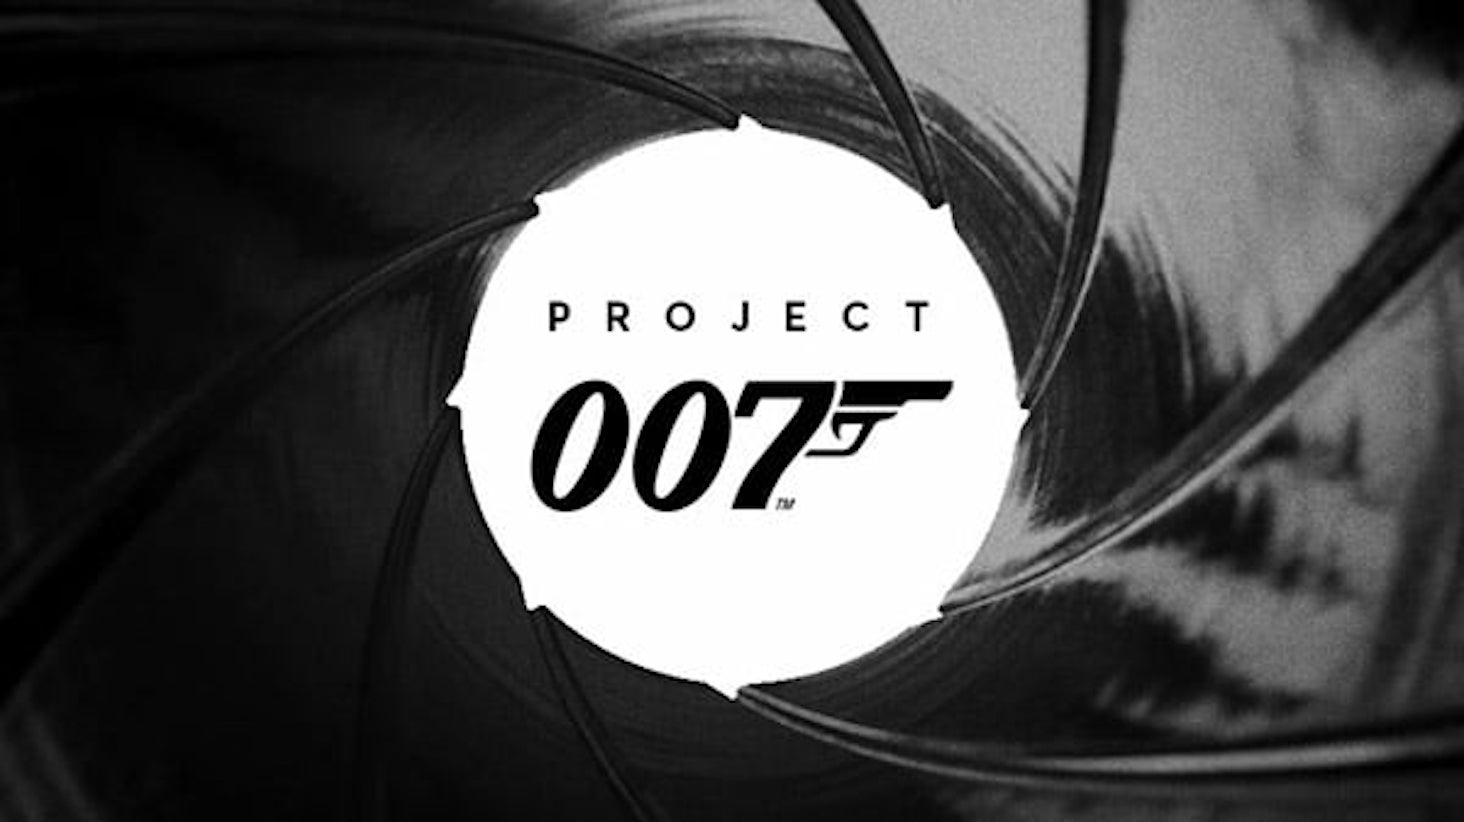 James Bond 007 Vector Logo - Download Free SVG Icon | Worldvectorlogo